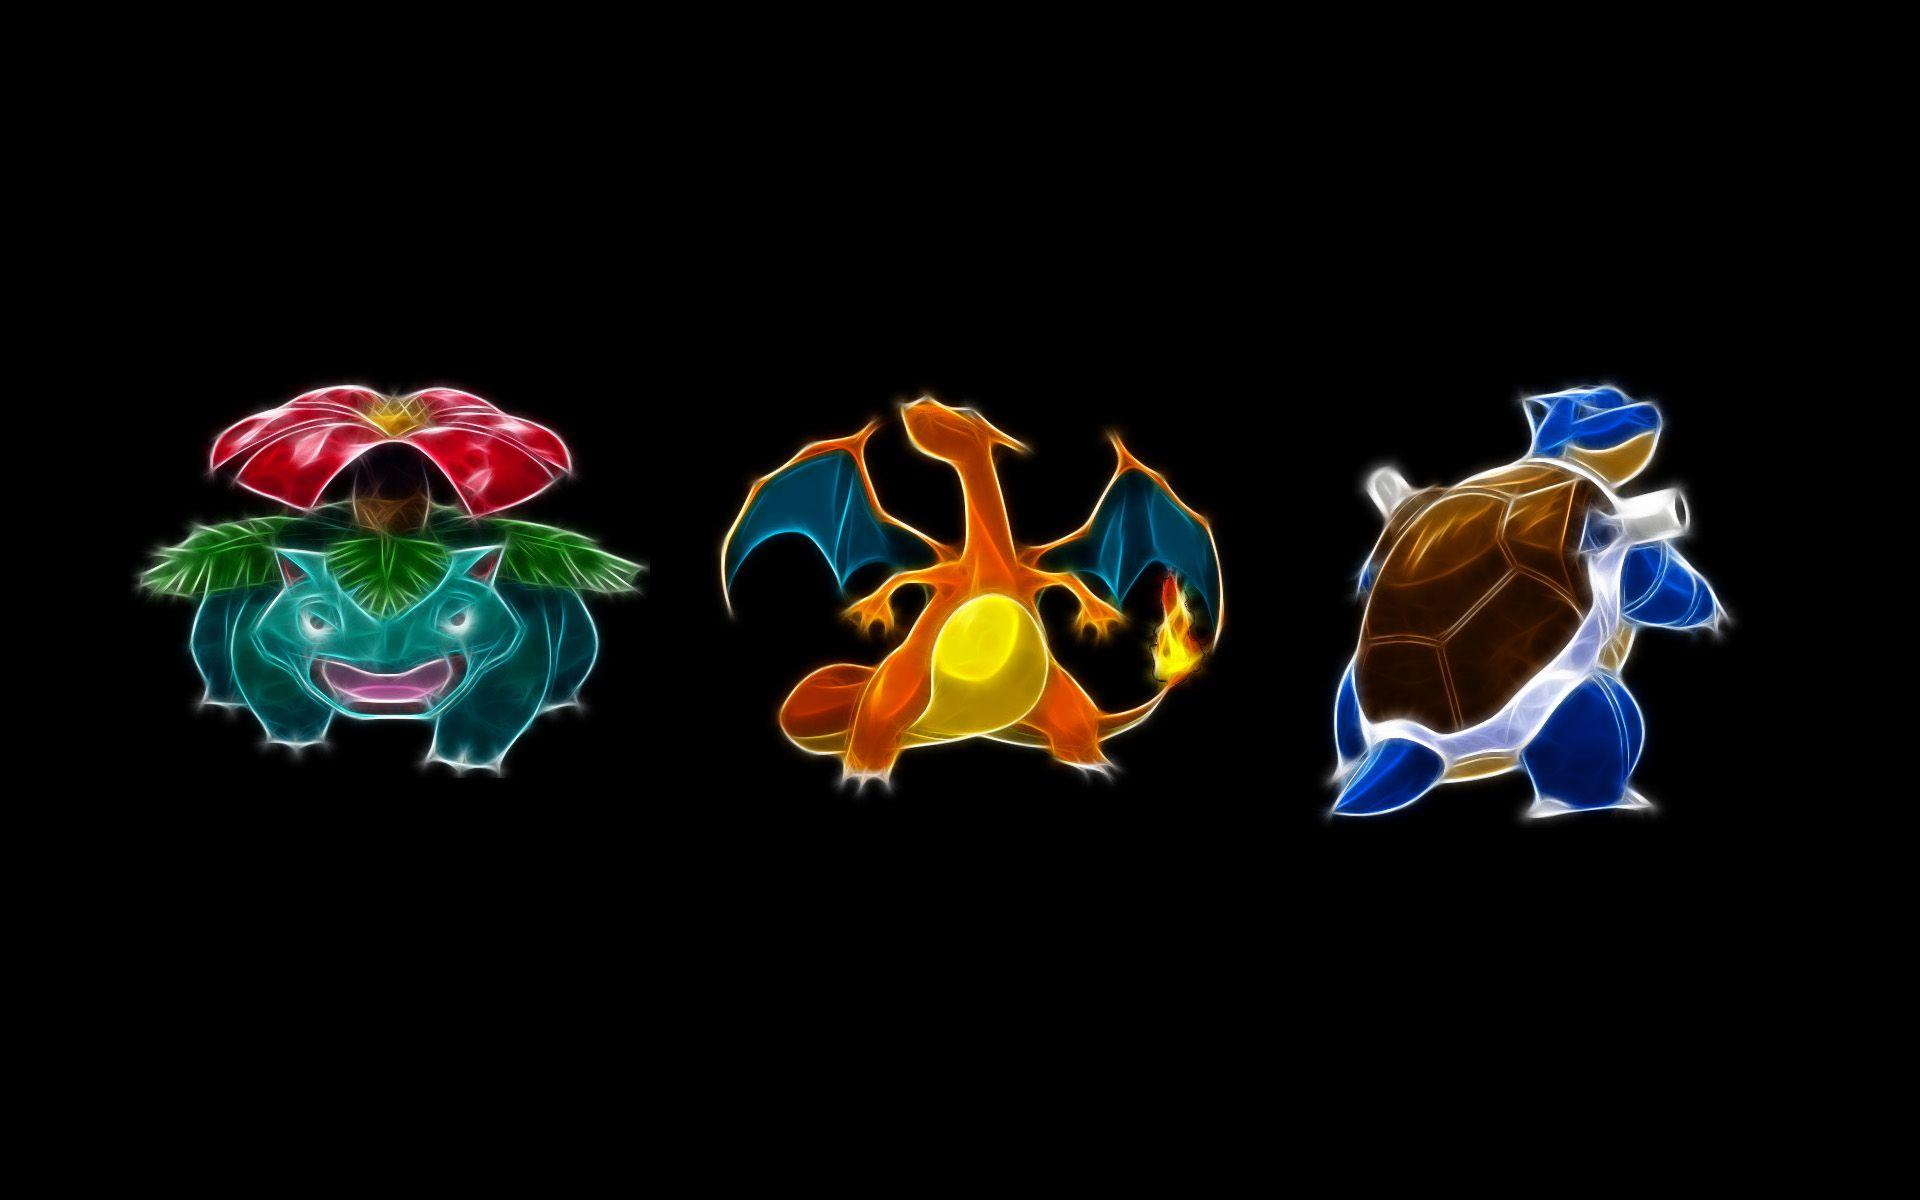 Charizard (Pokémon) HD Wallpaper and Background Image